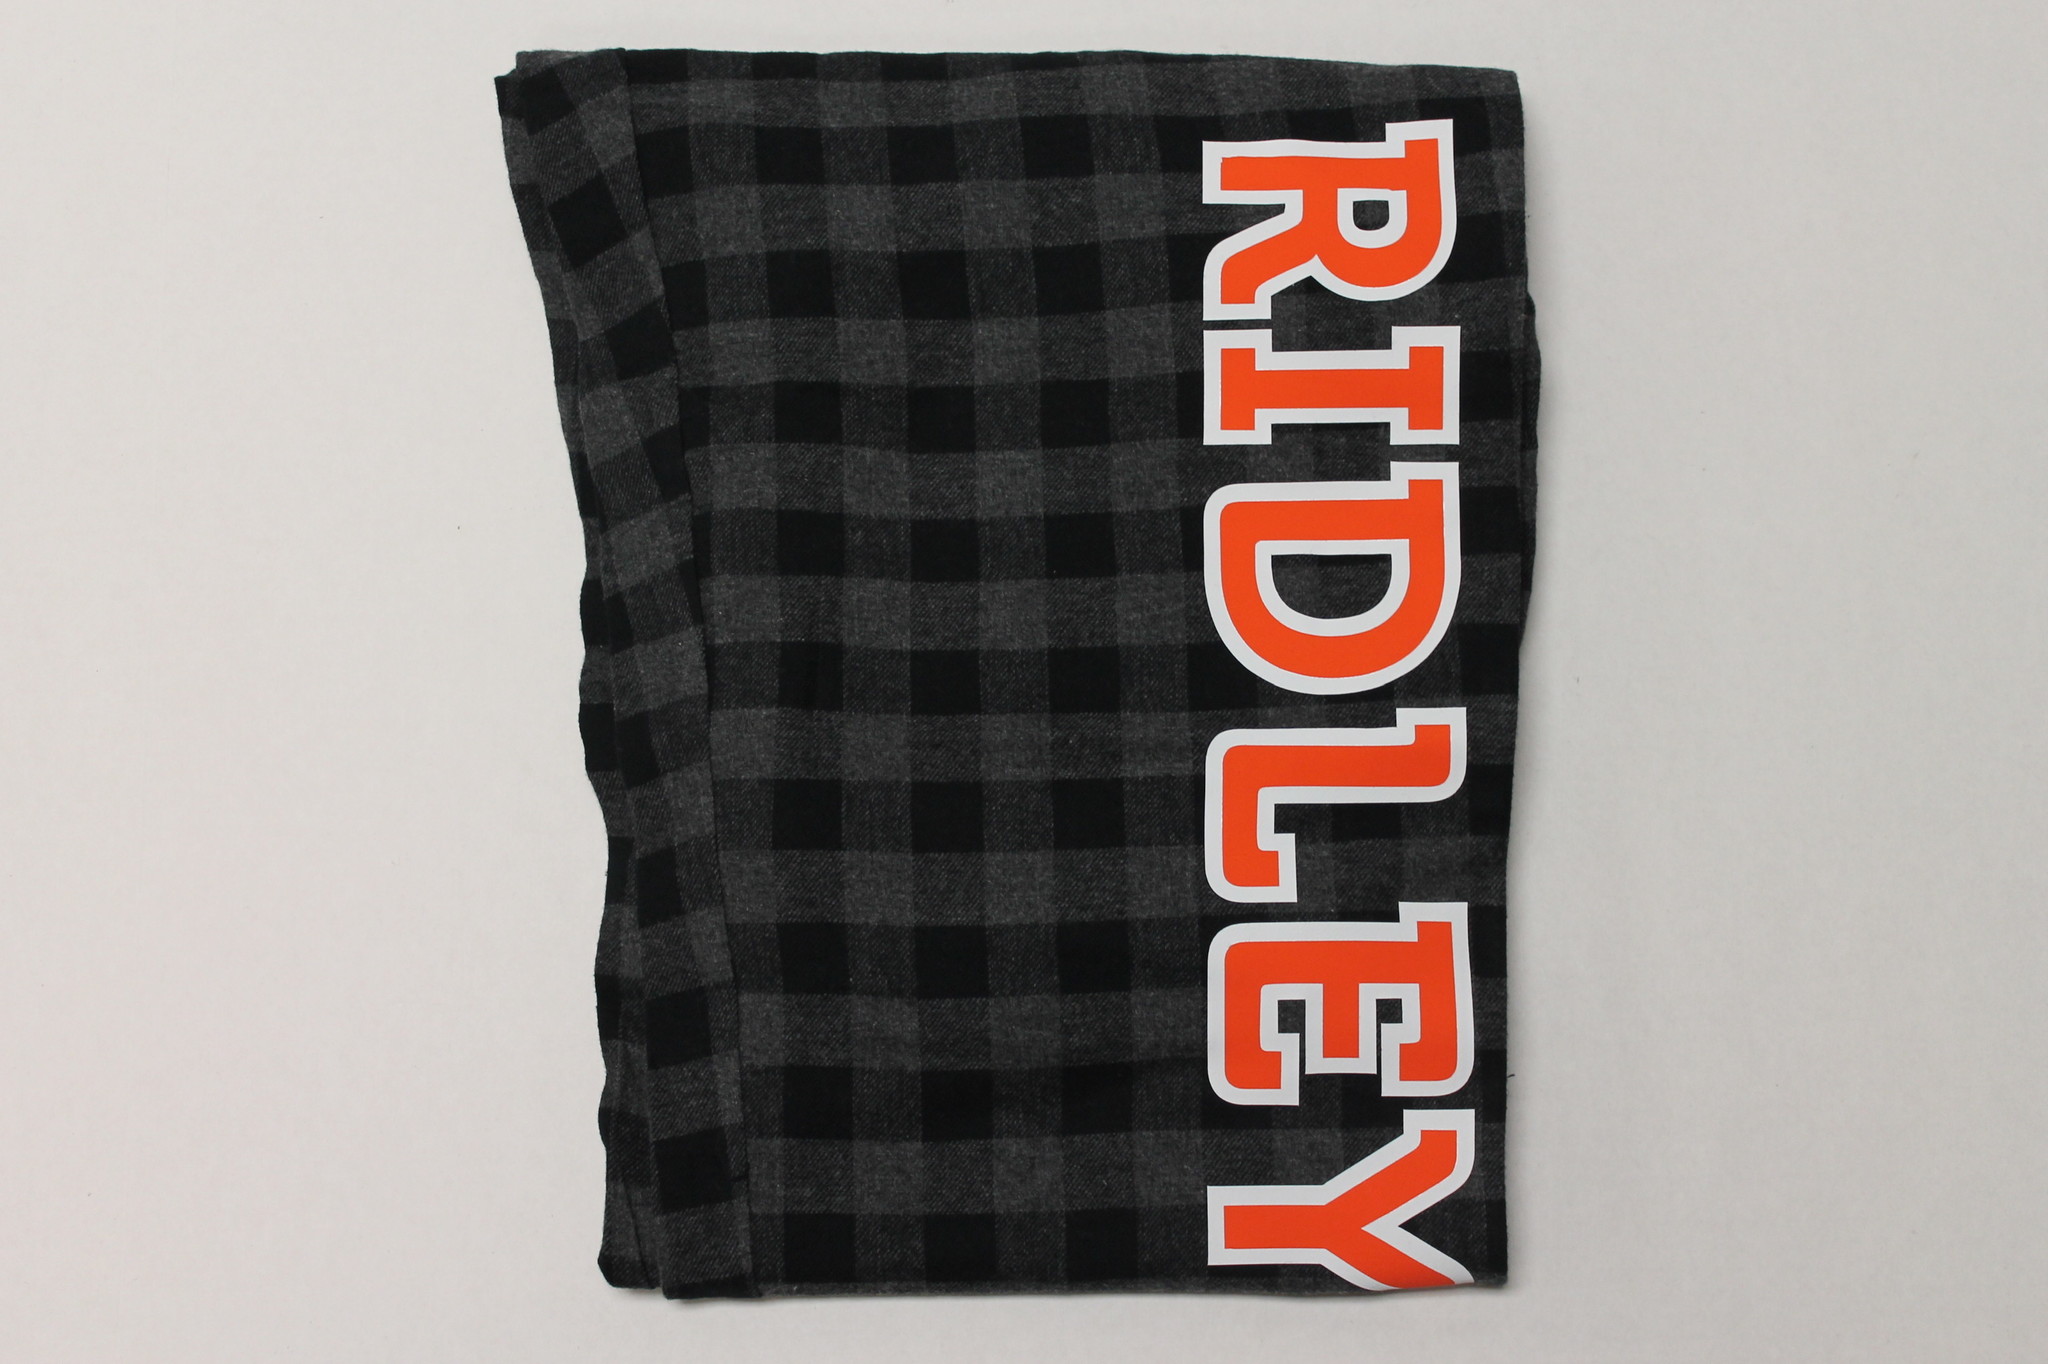 Pajama Pant - Black/Grey with Ridley